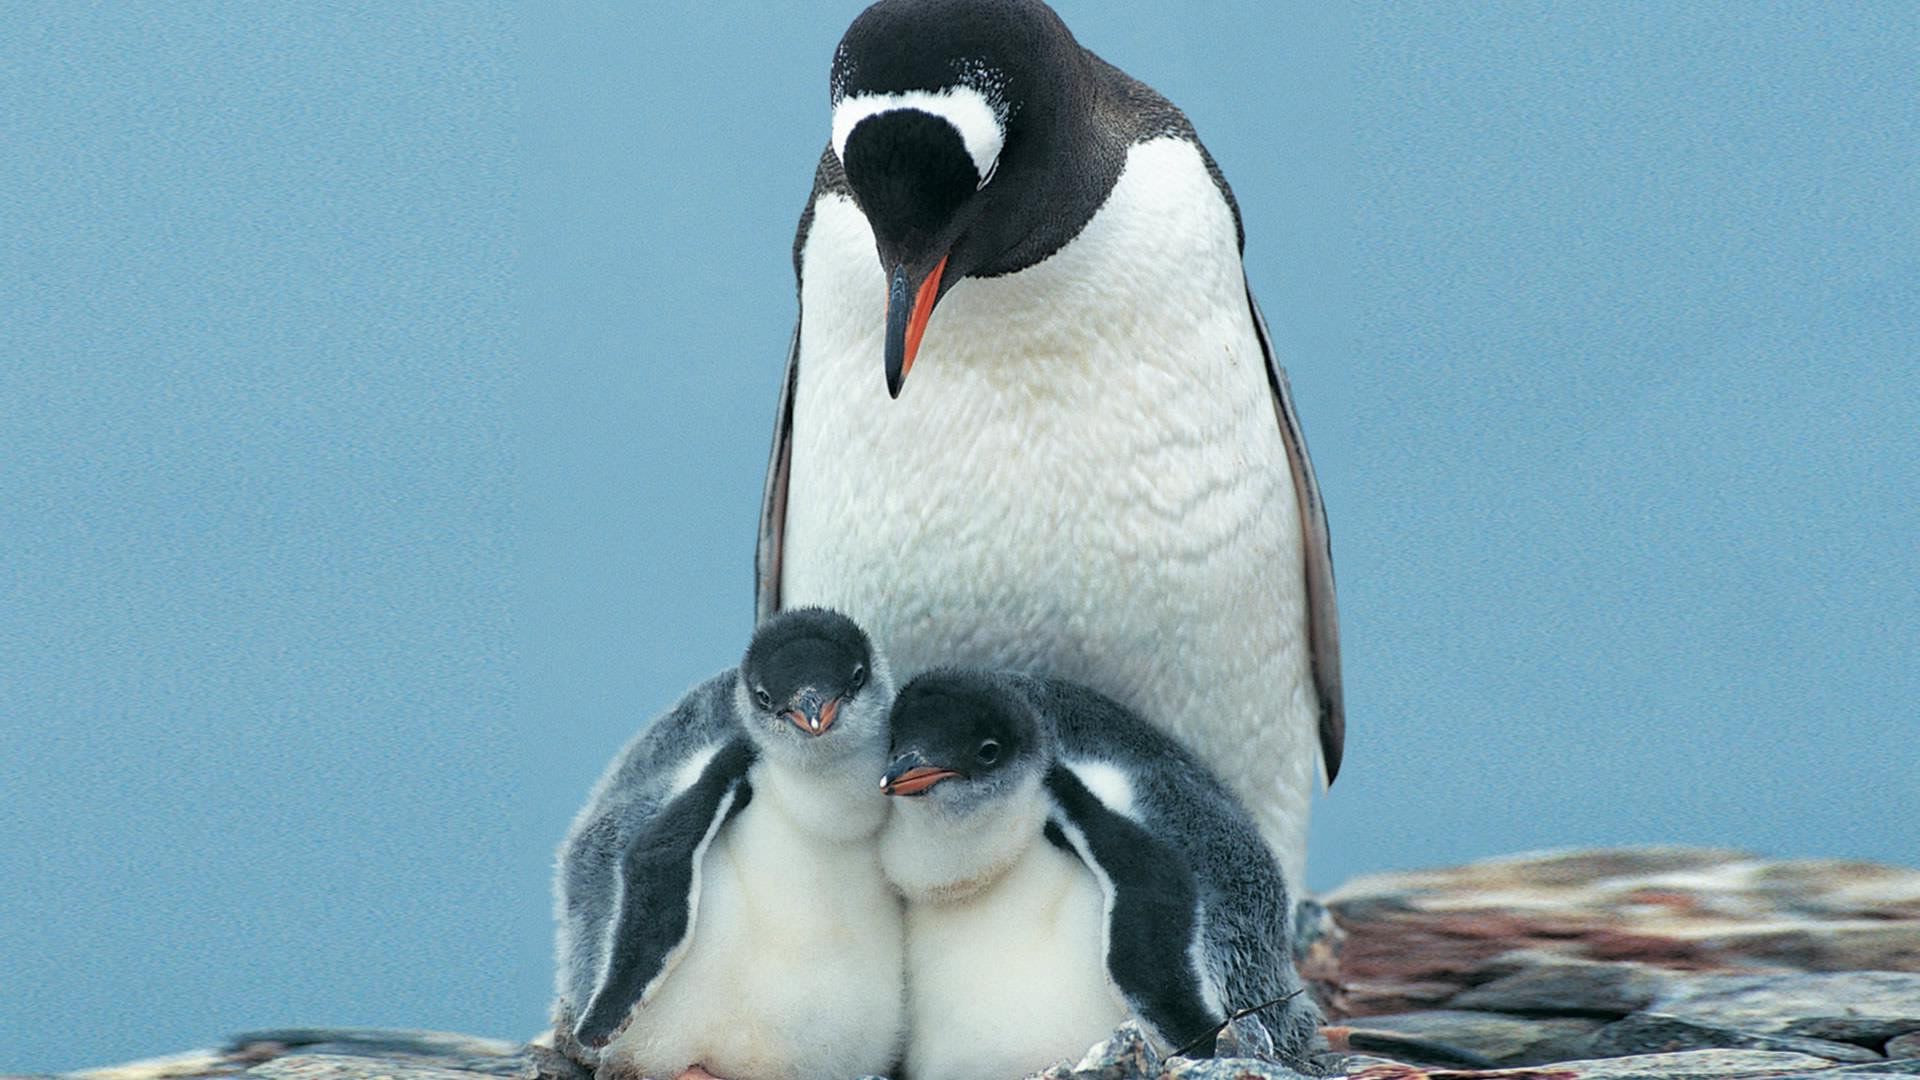 Download full hd Emperor Penguin desktop background ID:47925 for free